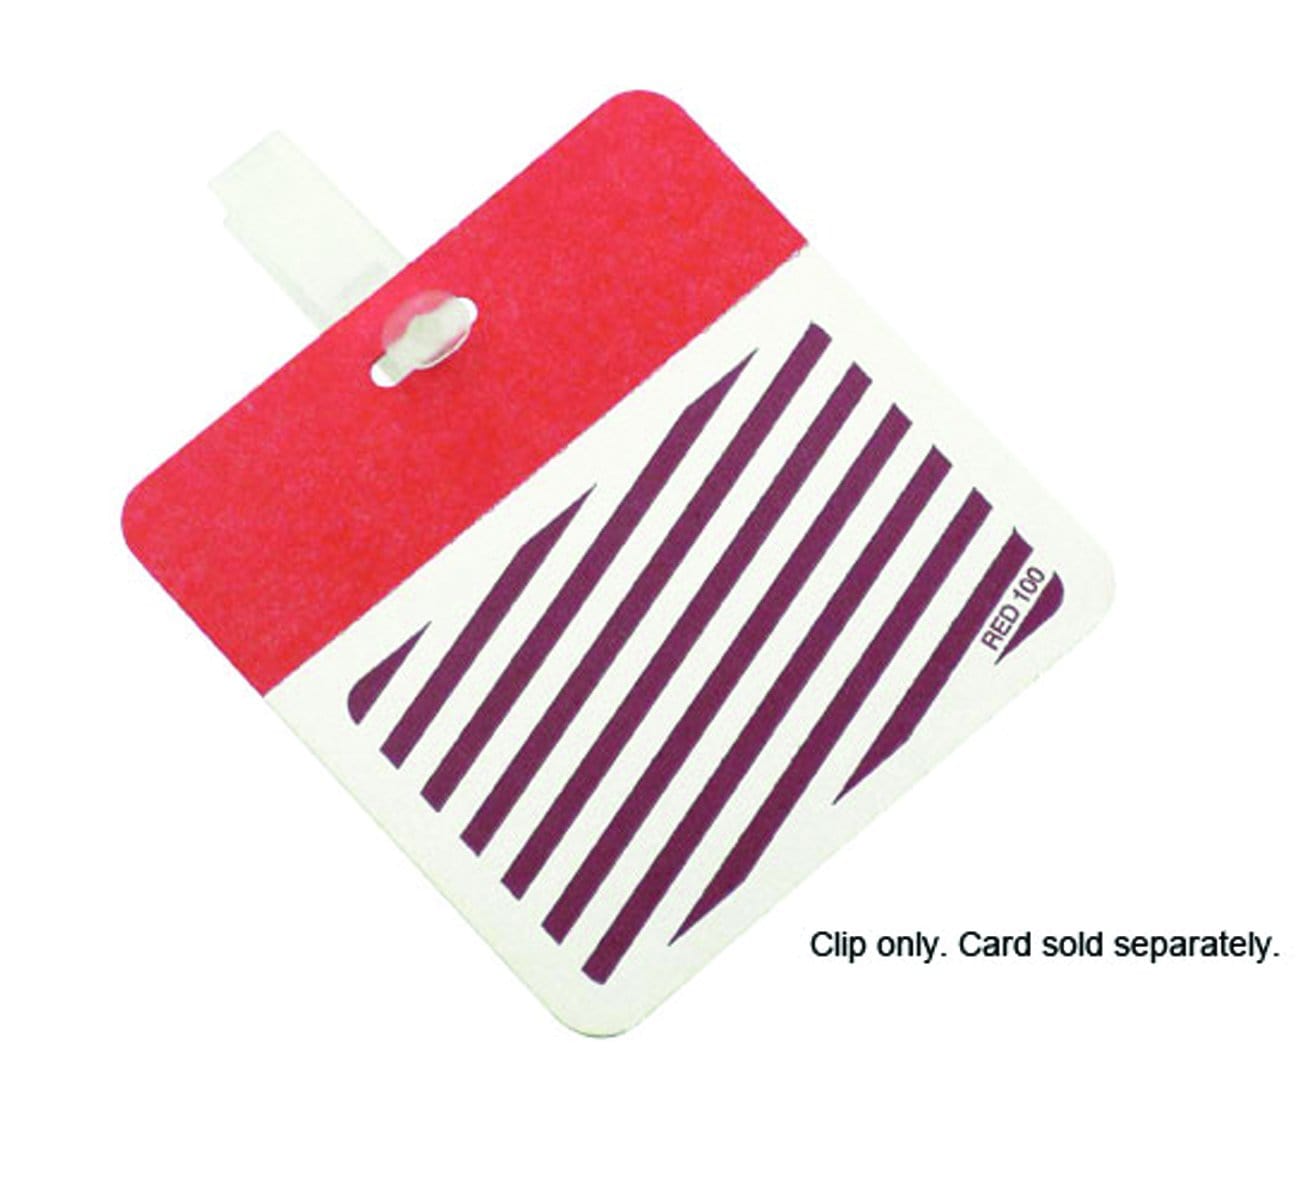 Reusable Plastic Cardclip - Badge Clip (Bag of 500 Clips) P/N 08075 08075